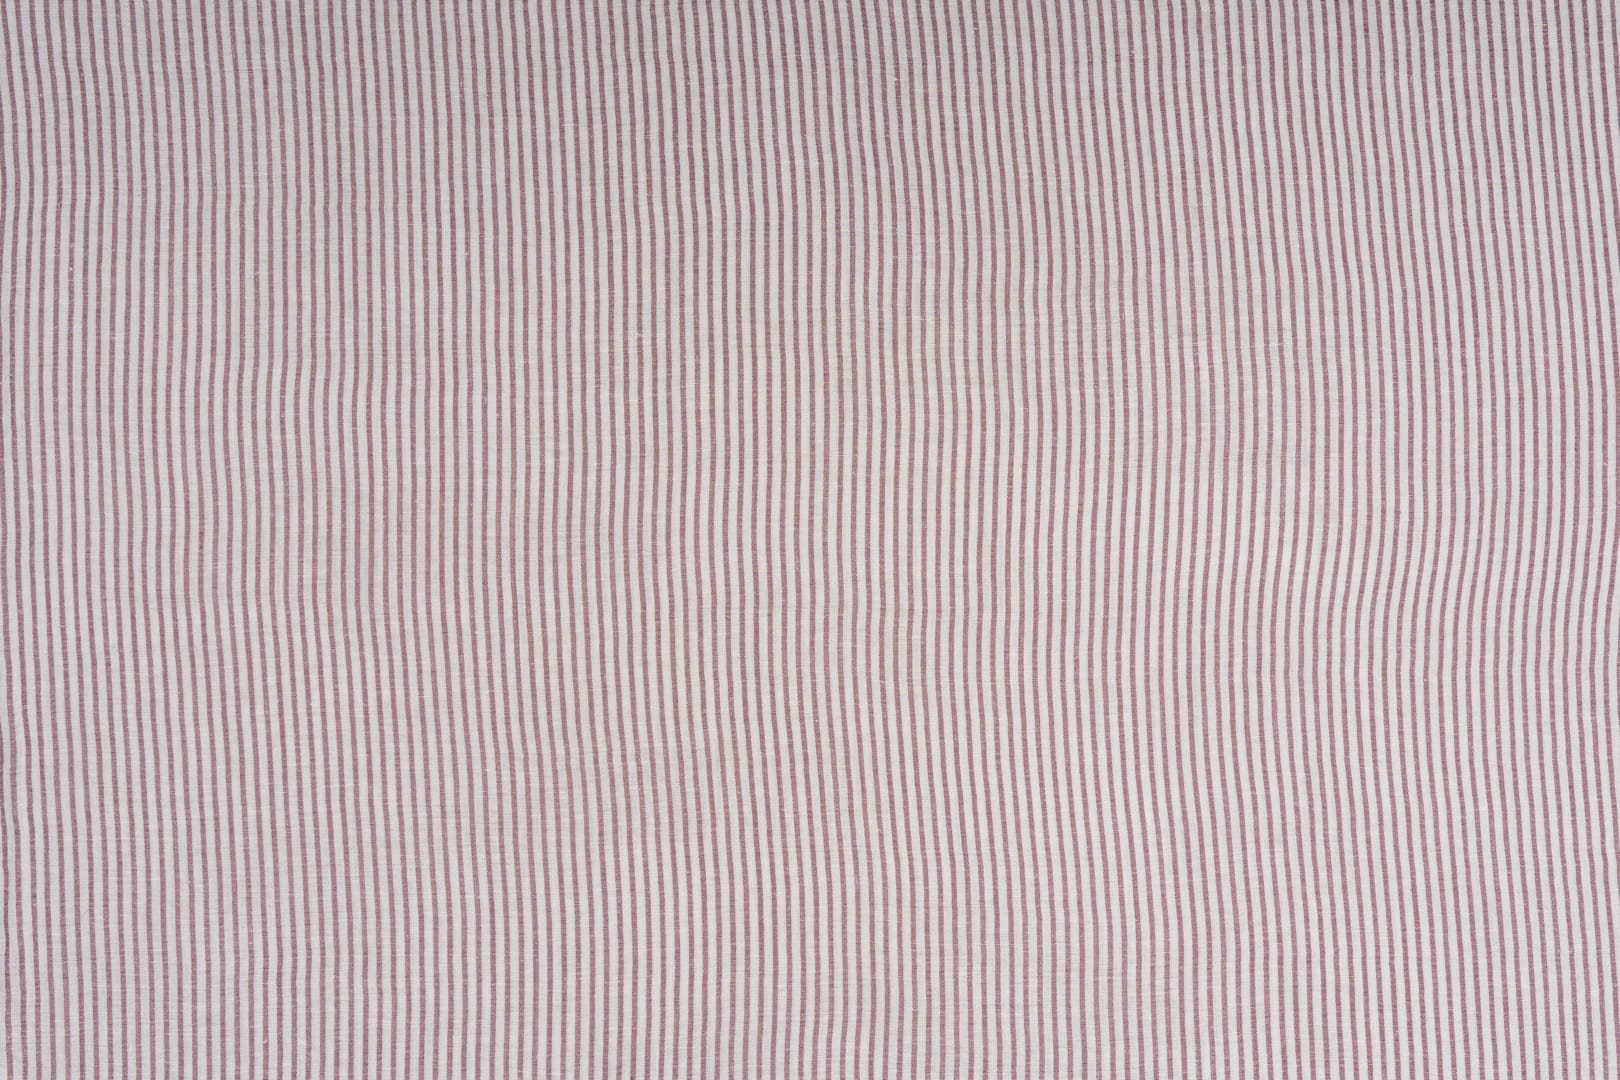 RACHELE 015 Fard home decoration fabric